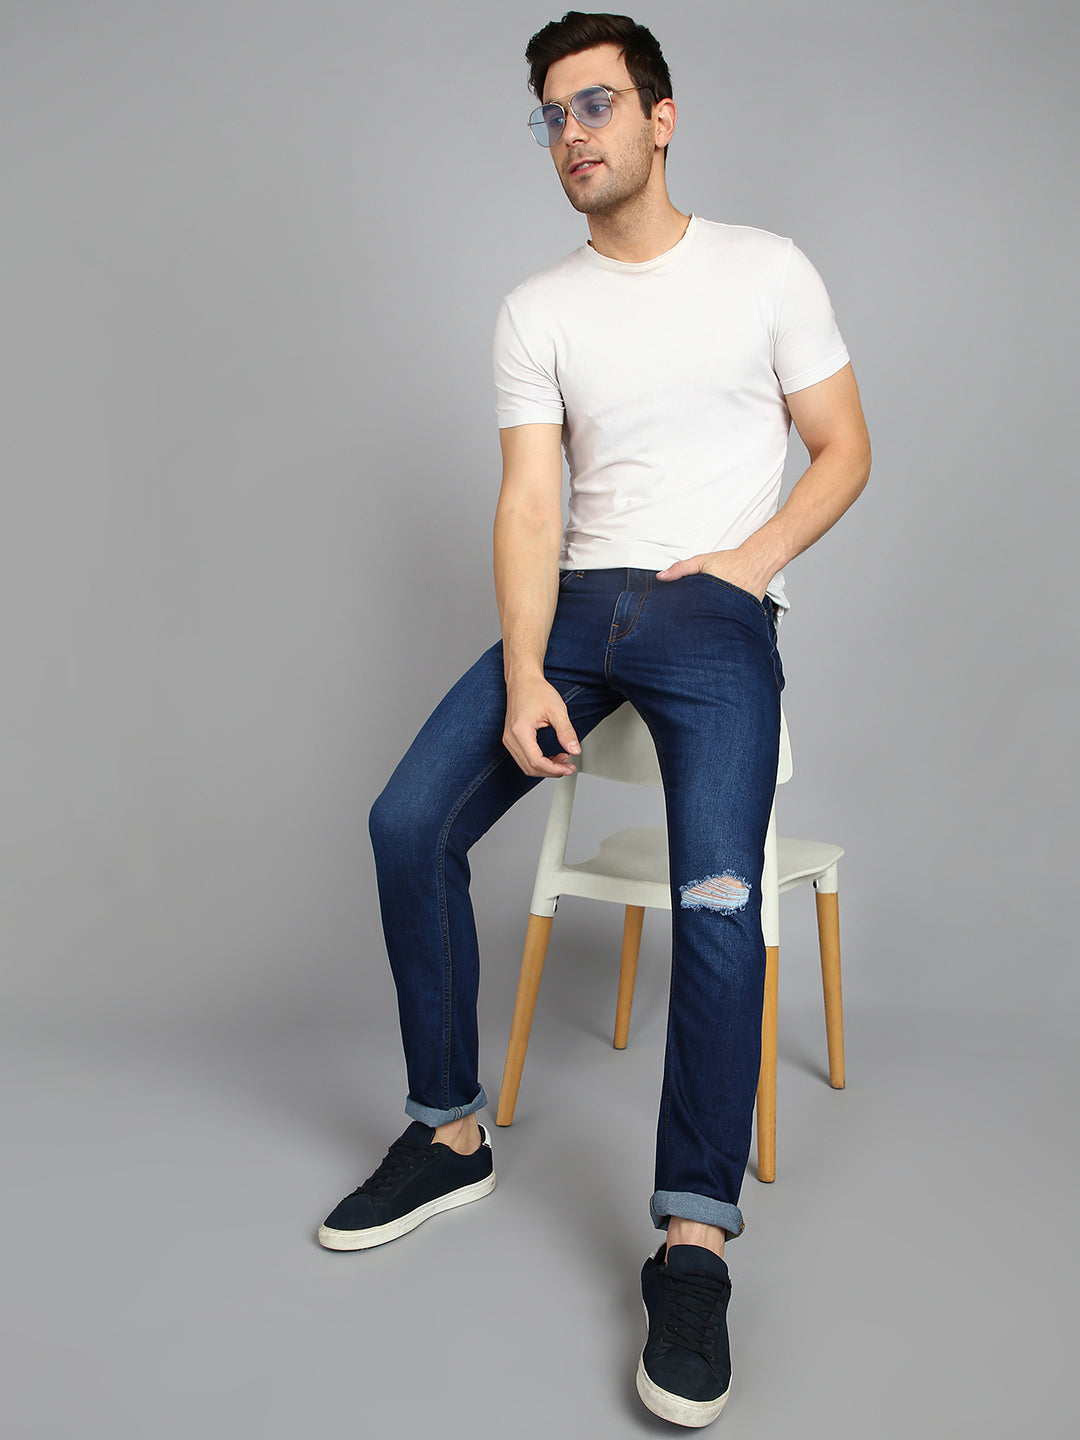 Urbano Fashion Men's Blue Slim Fit Washed Mild Distressed Jeans Stretch